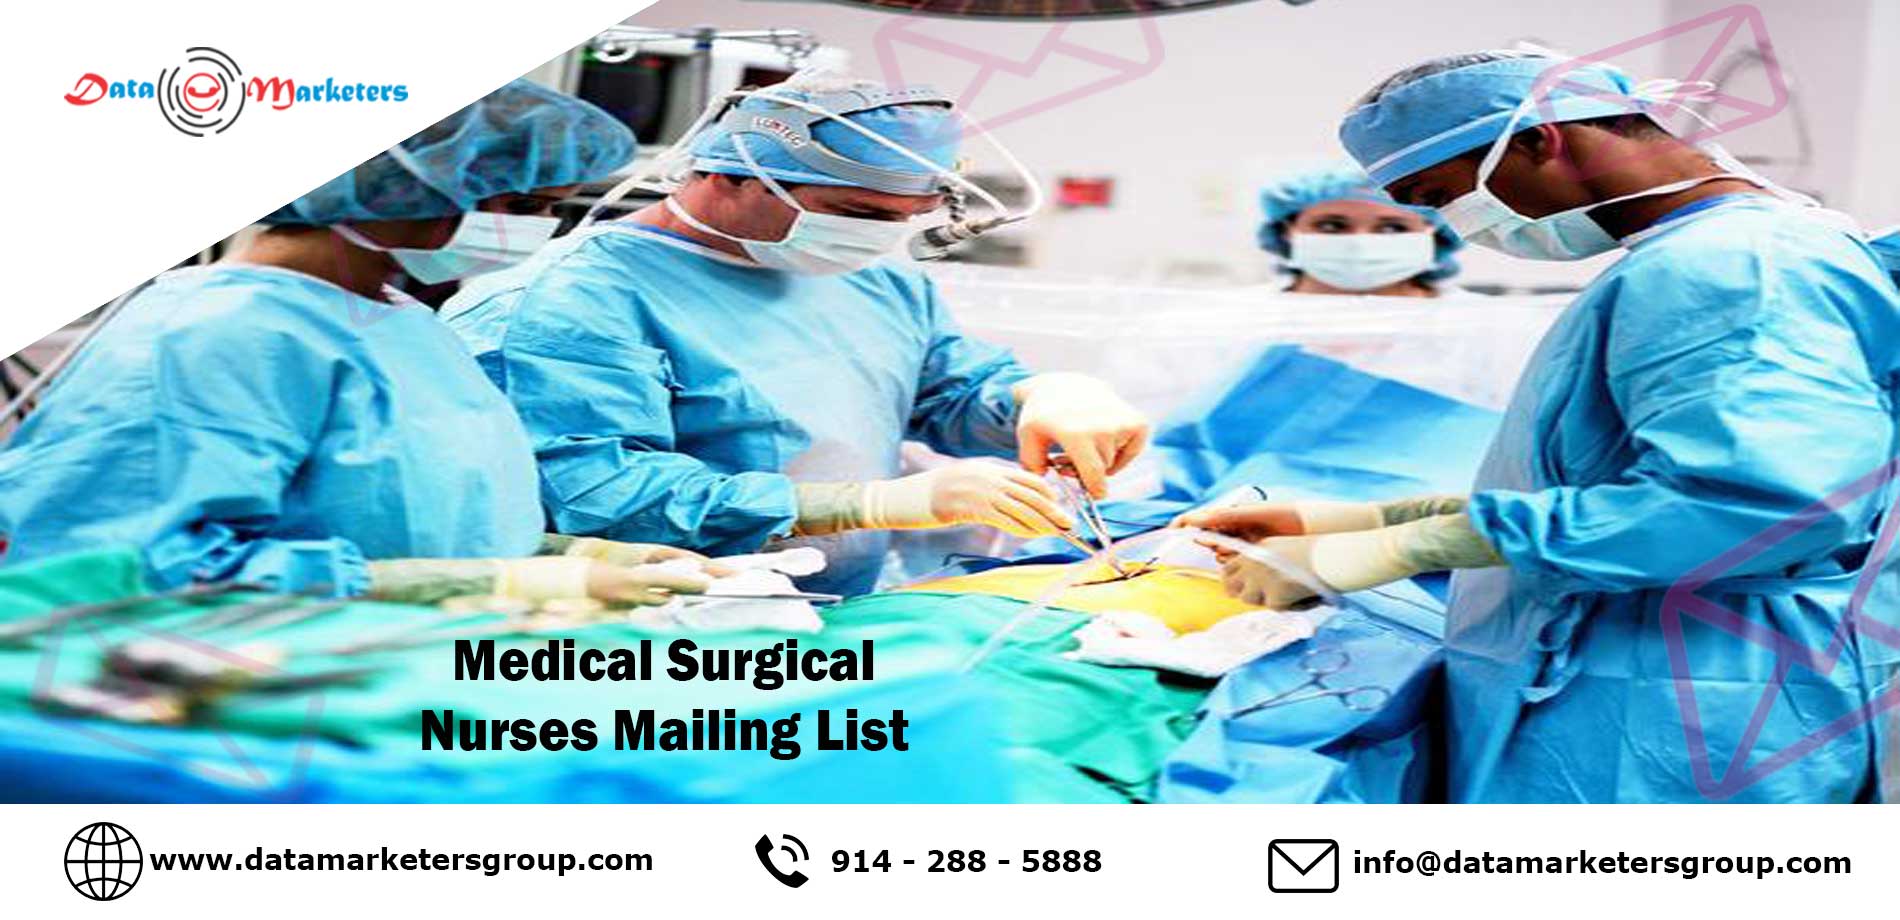 Medical Surgical Nurses Email List | Medical Surgical Nurses Mailing List 